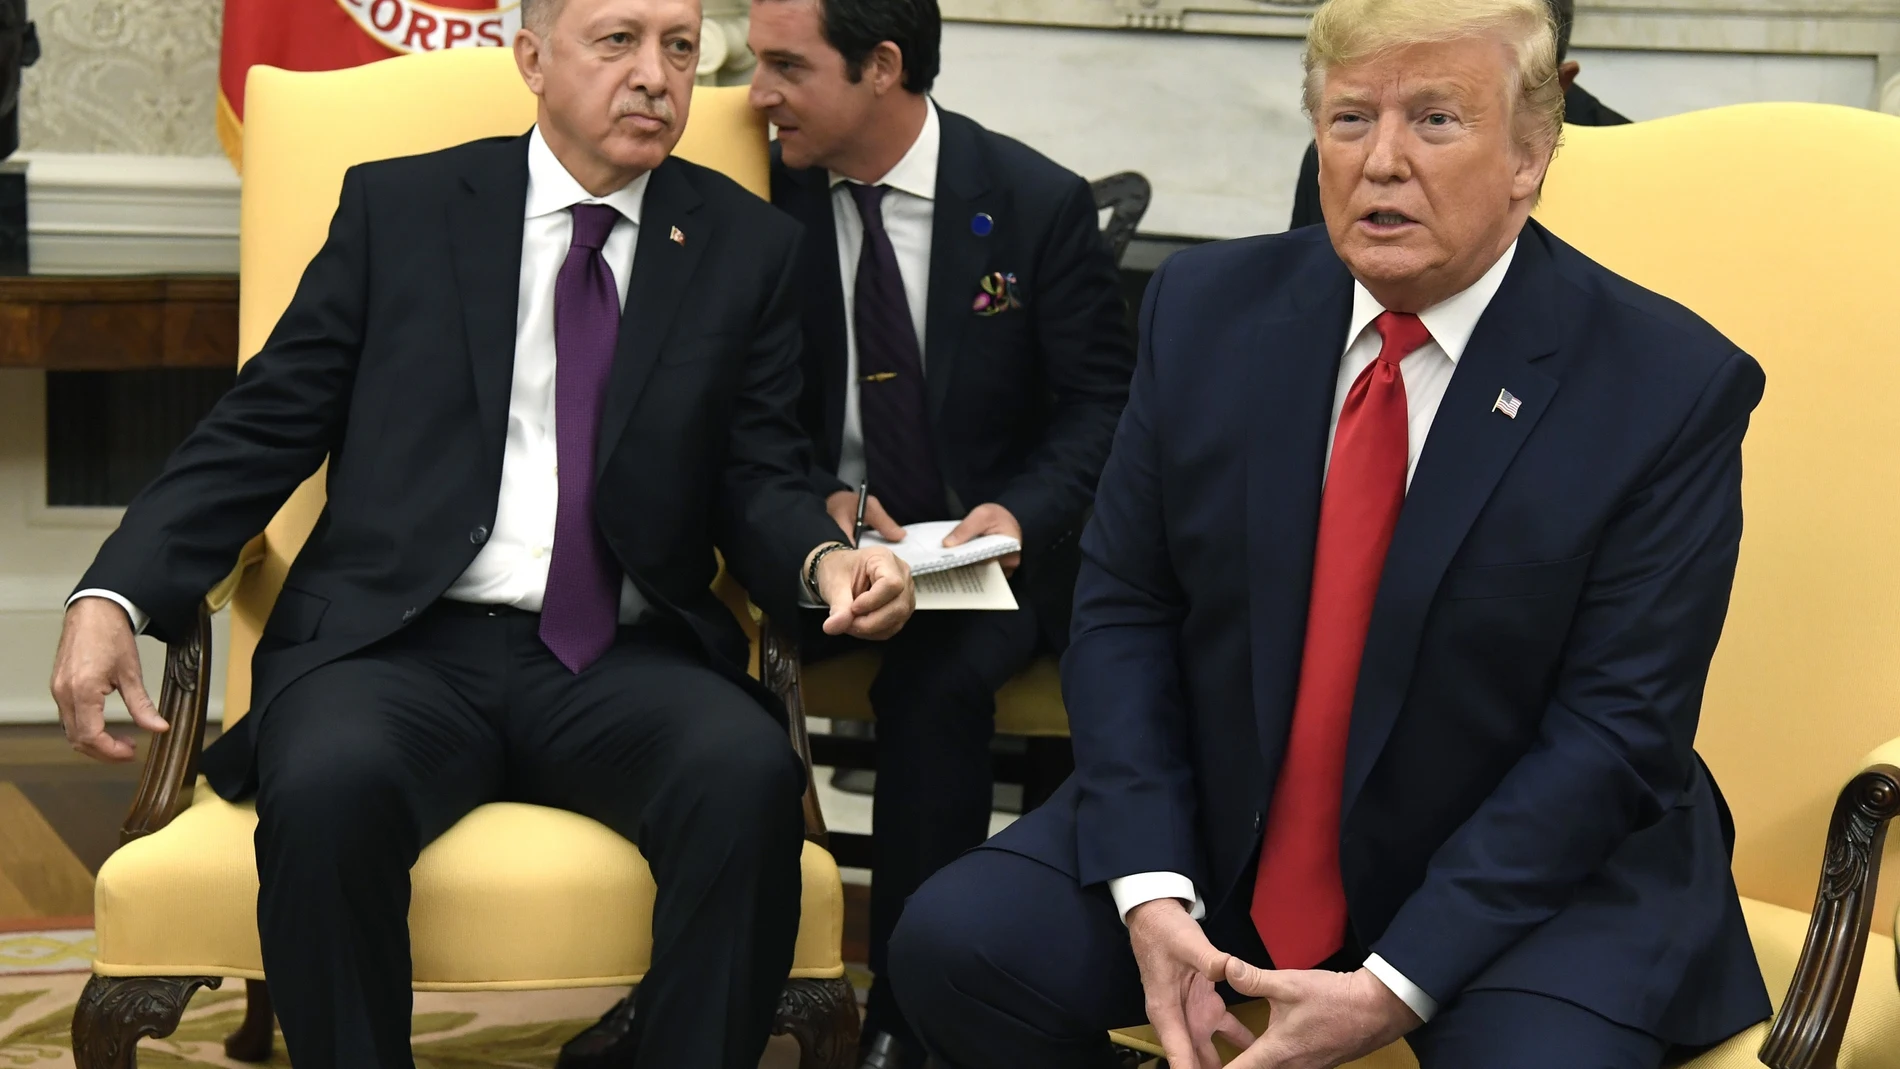 Trump welcomes Turkey's President Erdogan to the White House